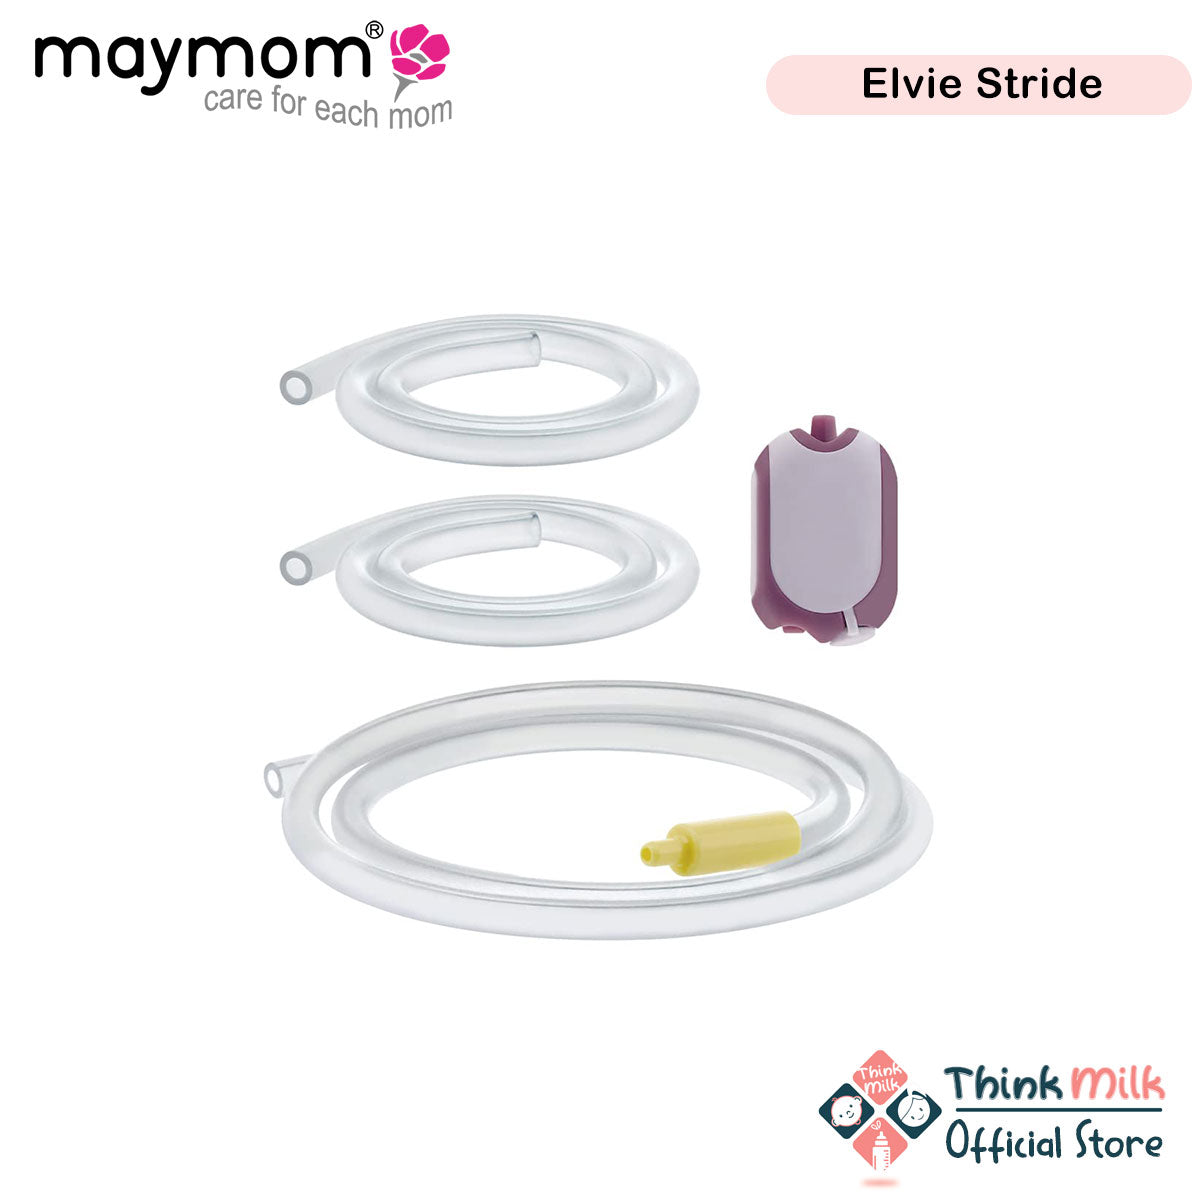 Maymom Tubing For Elvie Stride